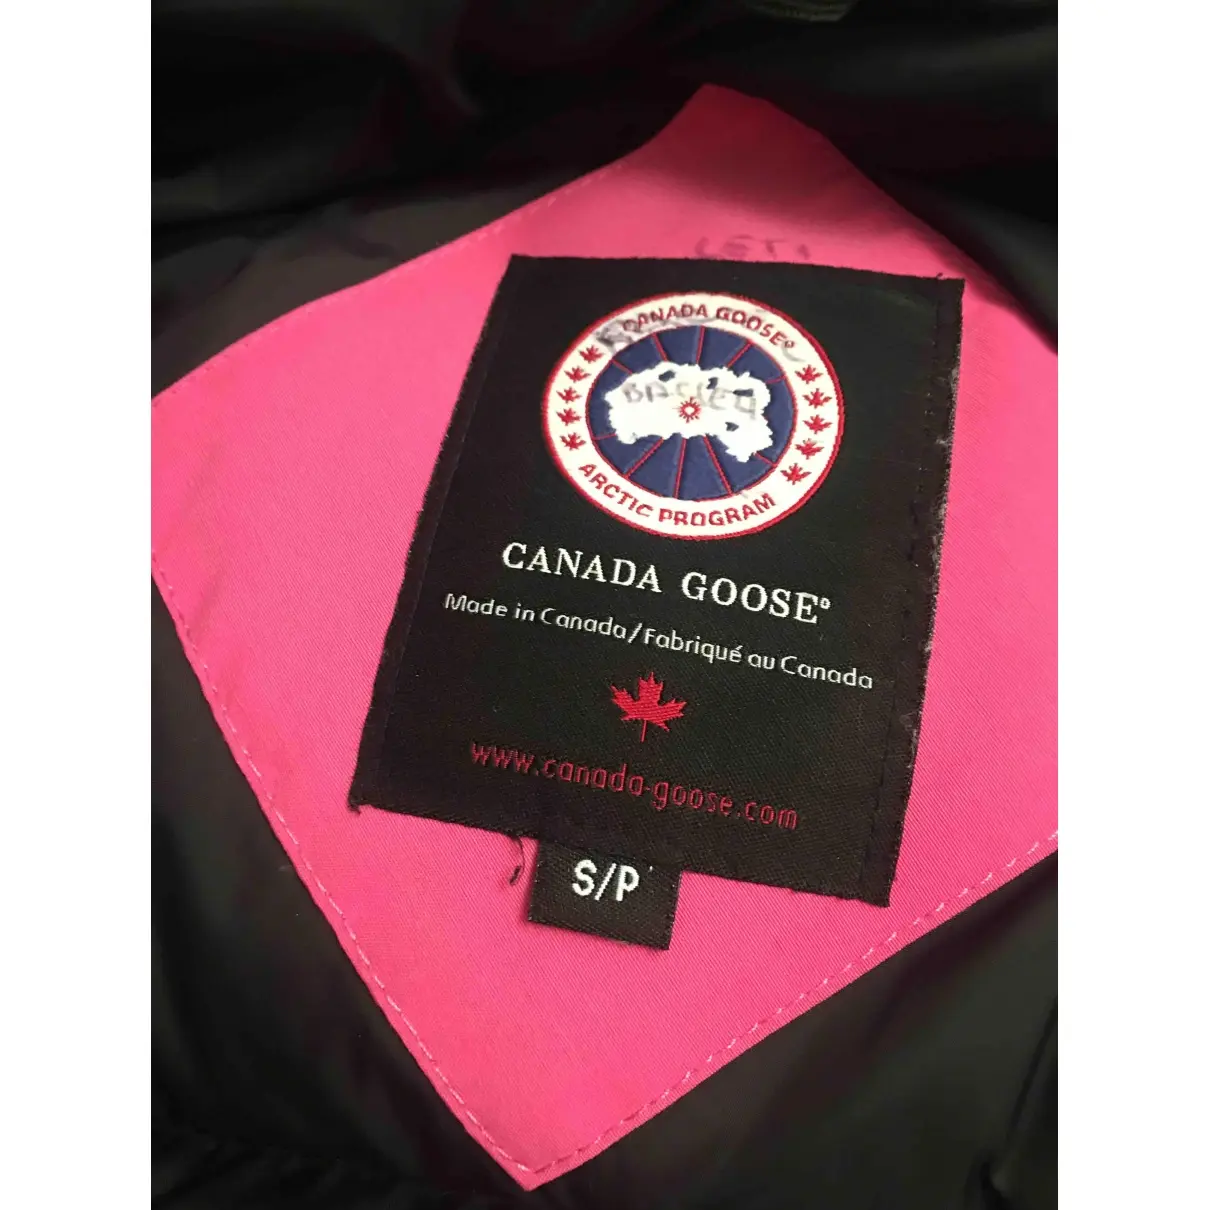 Buy Canada Goose Expedition coat online